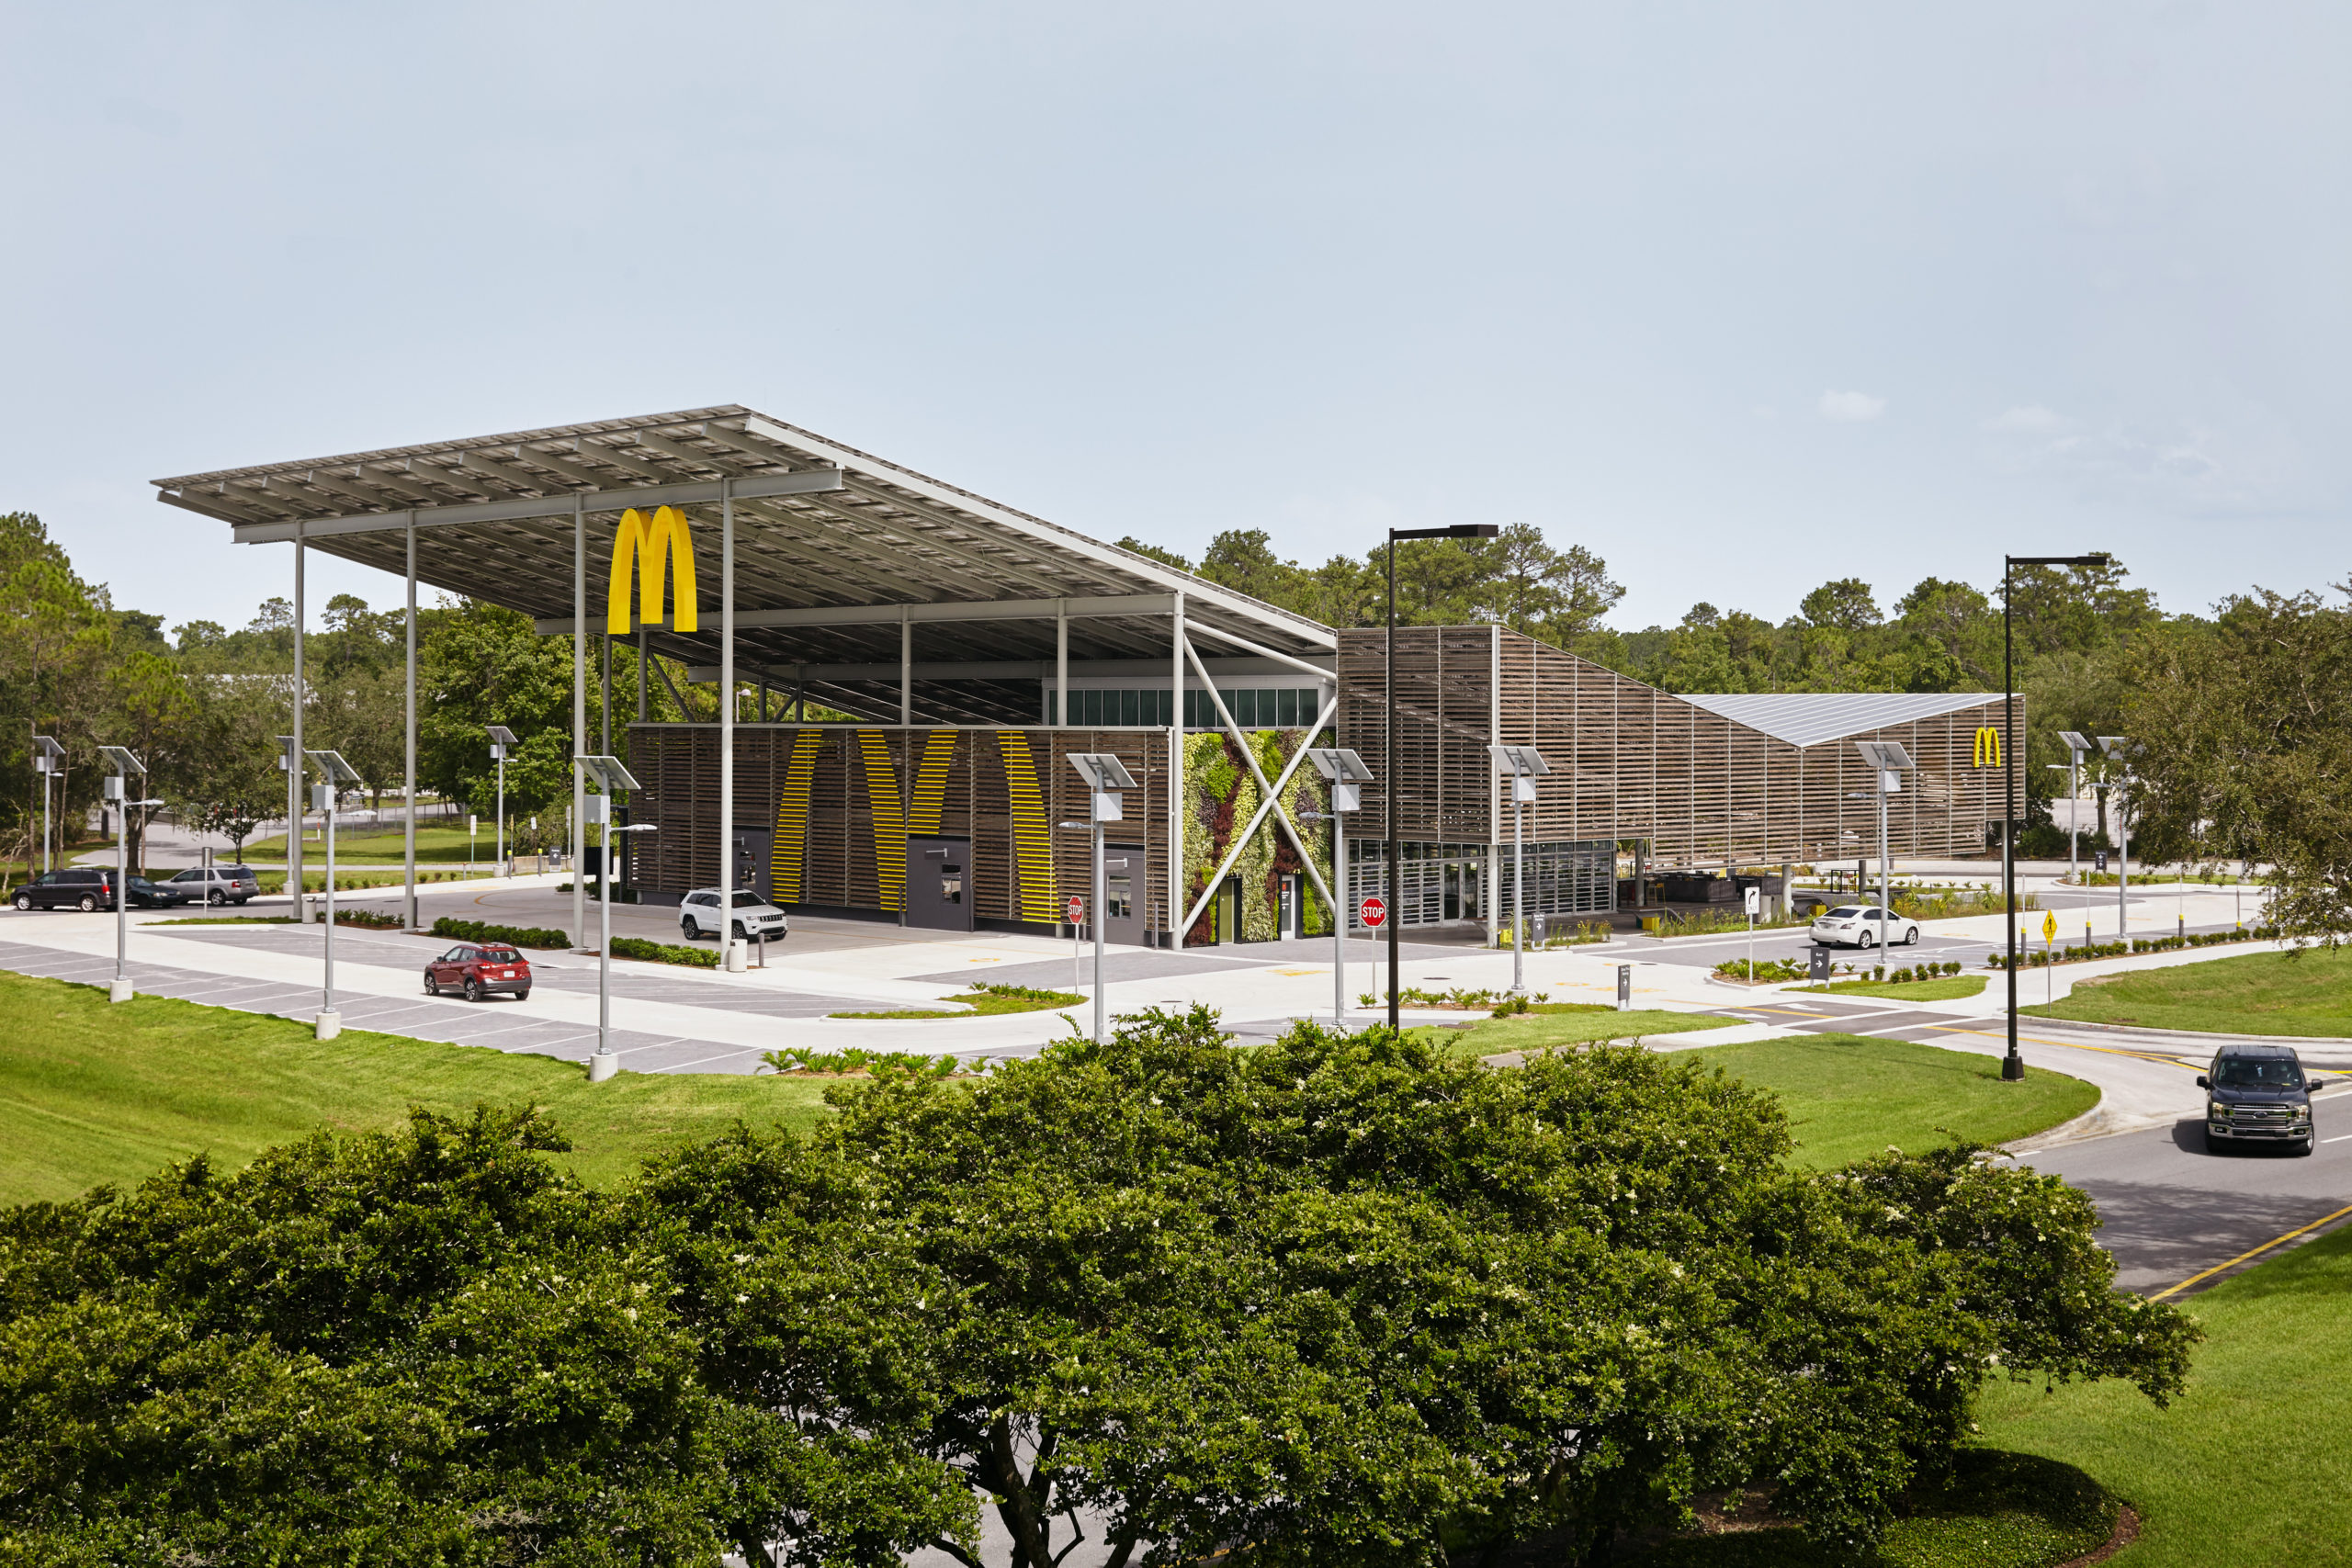 McDonald’s unveils net zero restaurant at Disney World - Renewable Energy World